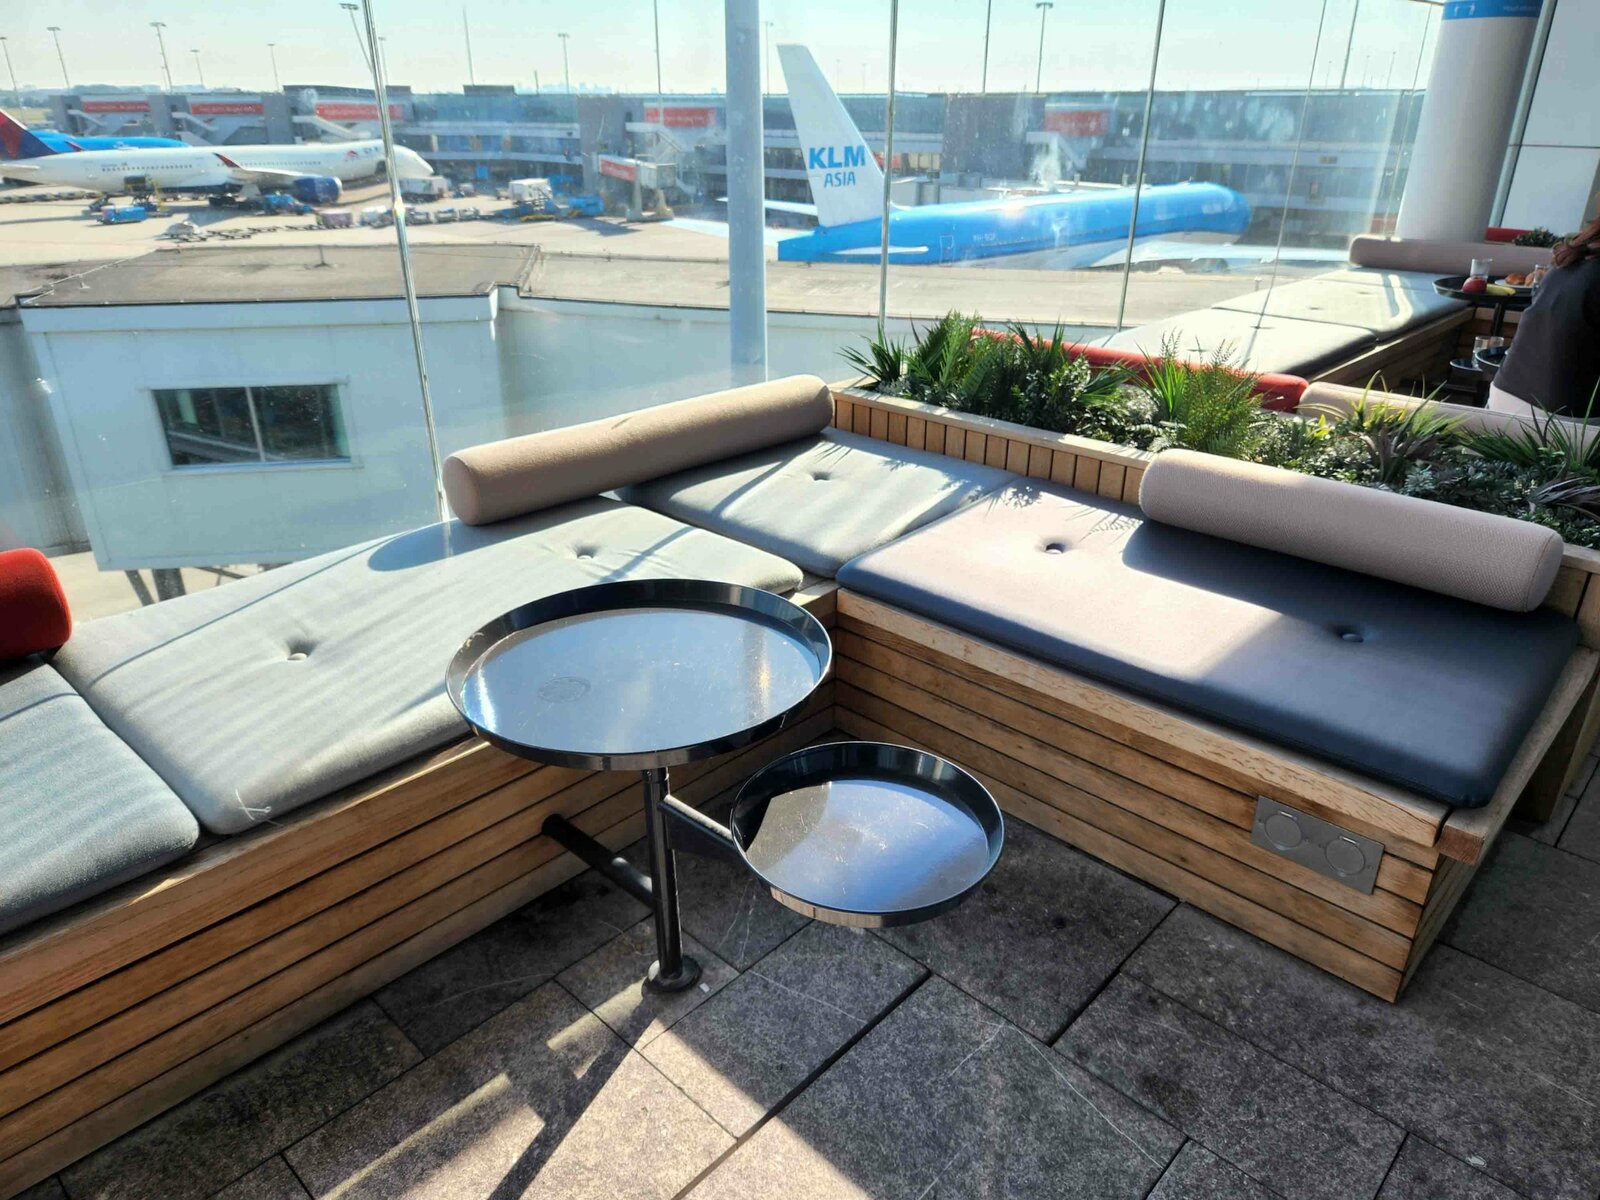 Klm Amsterdam Lounge Terrace 2